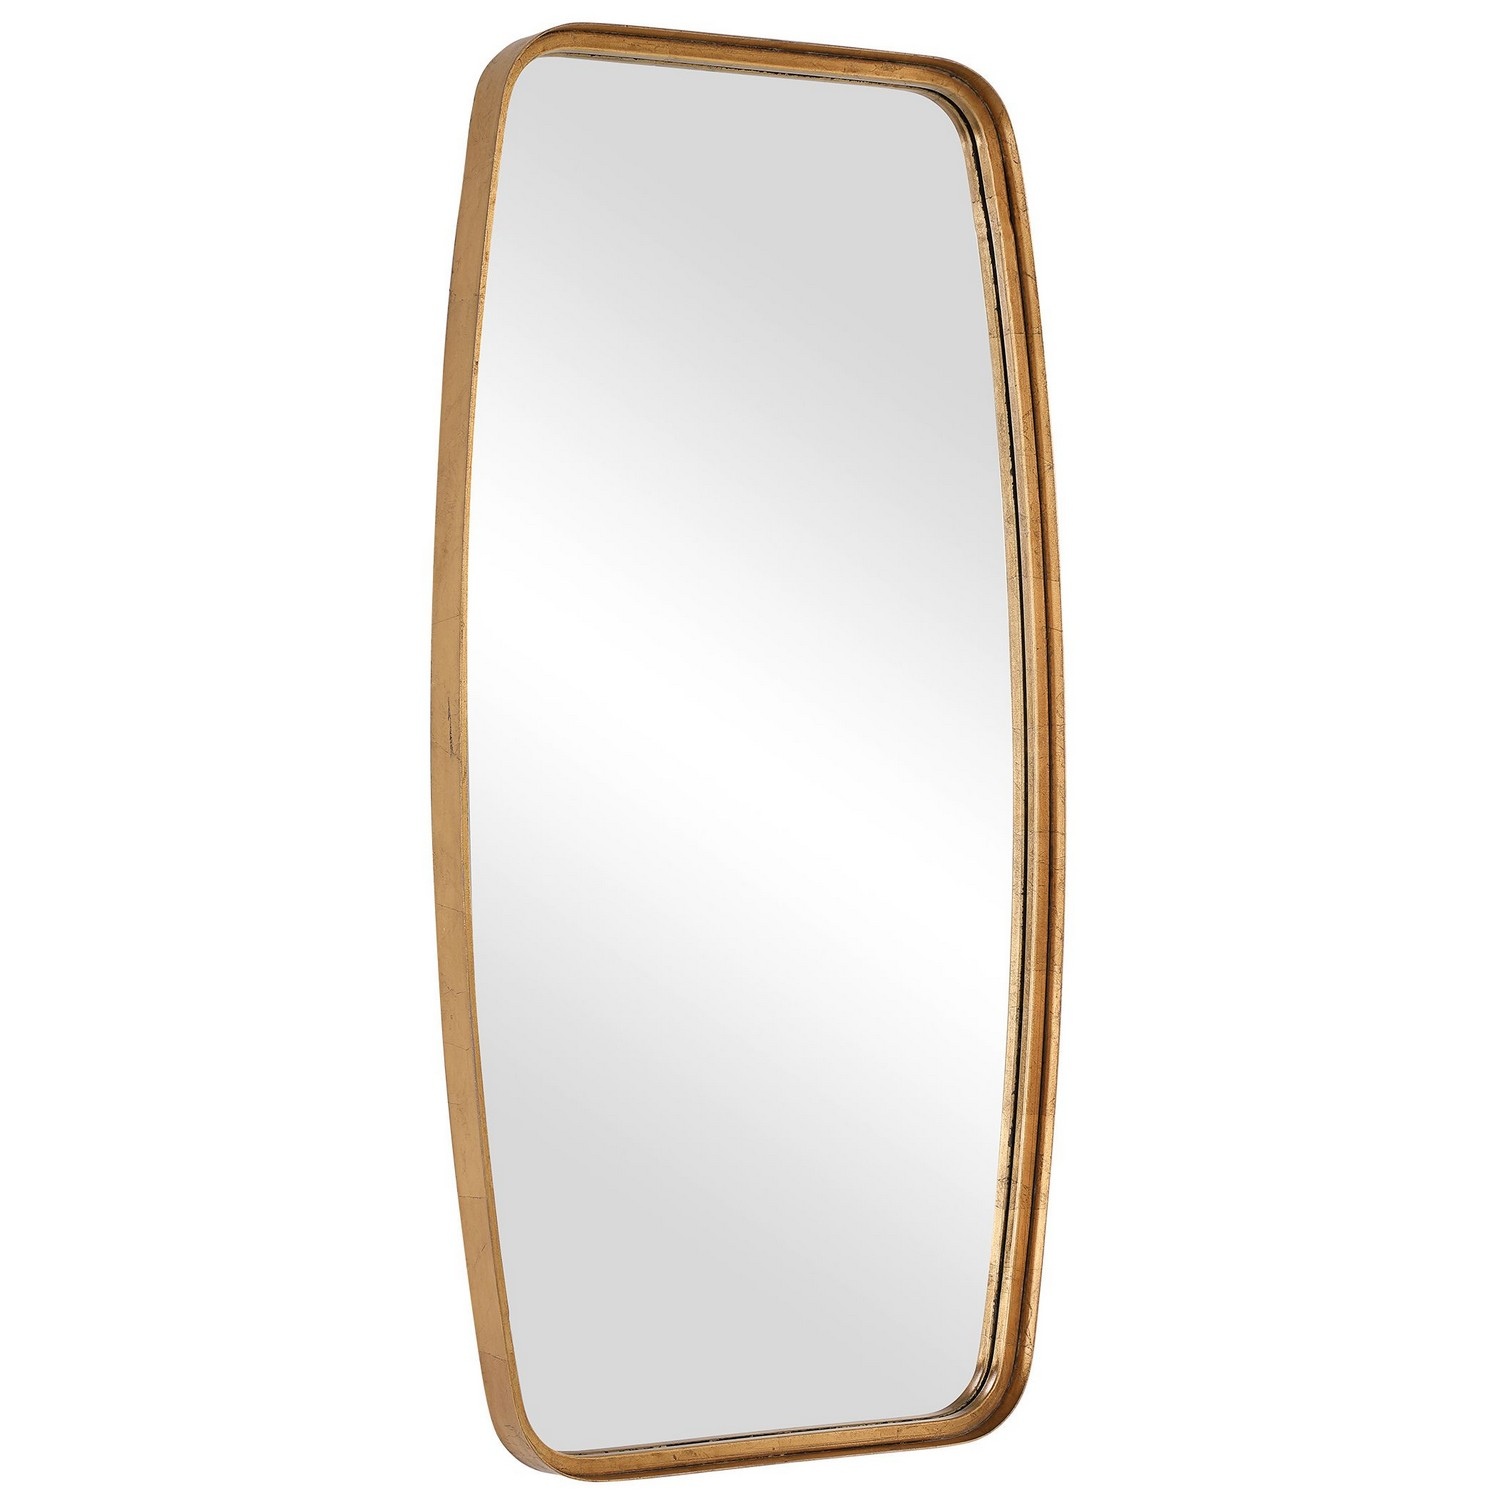 Uttermost W00515 Mirror - Gold Leaf